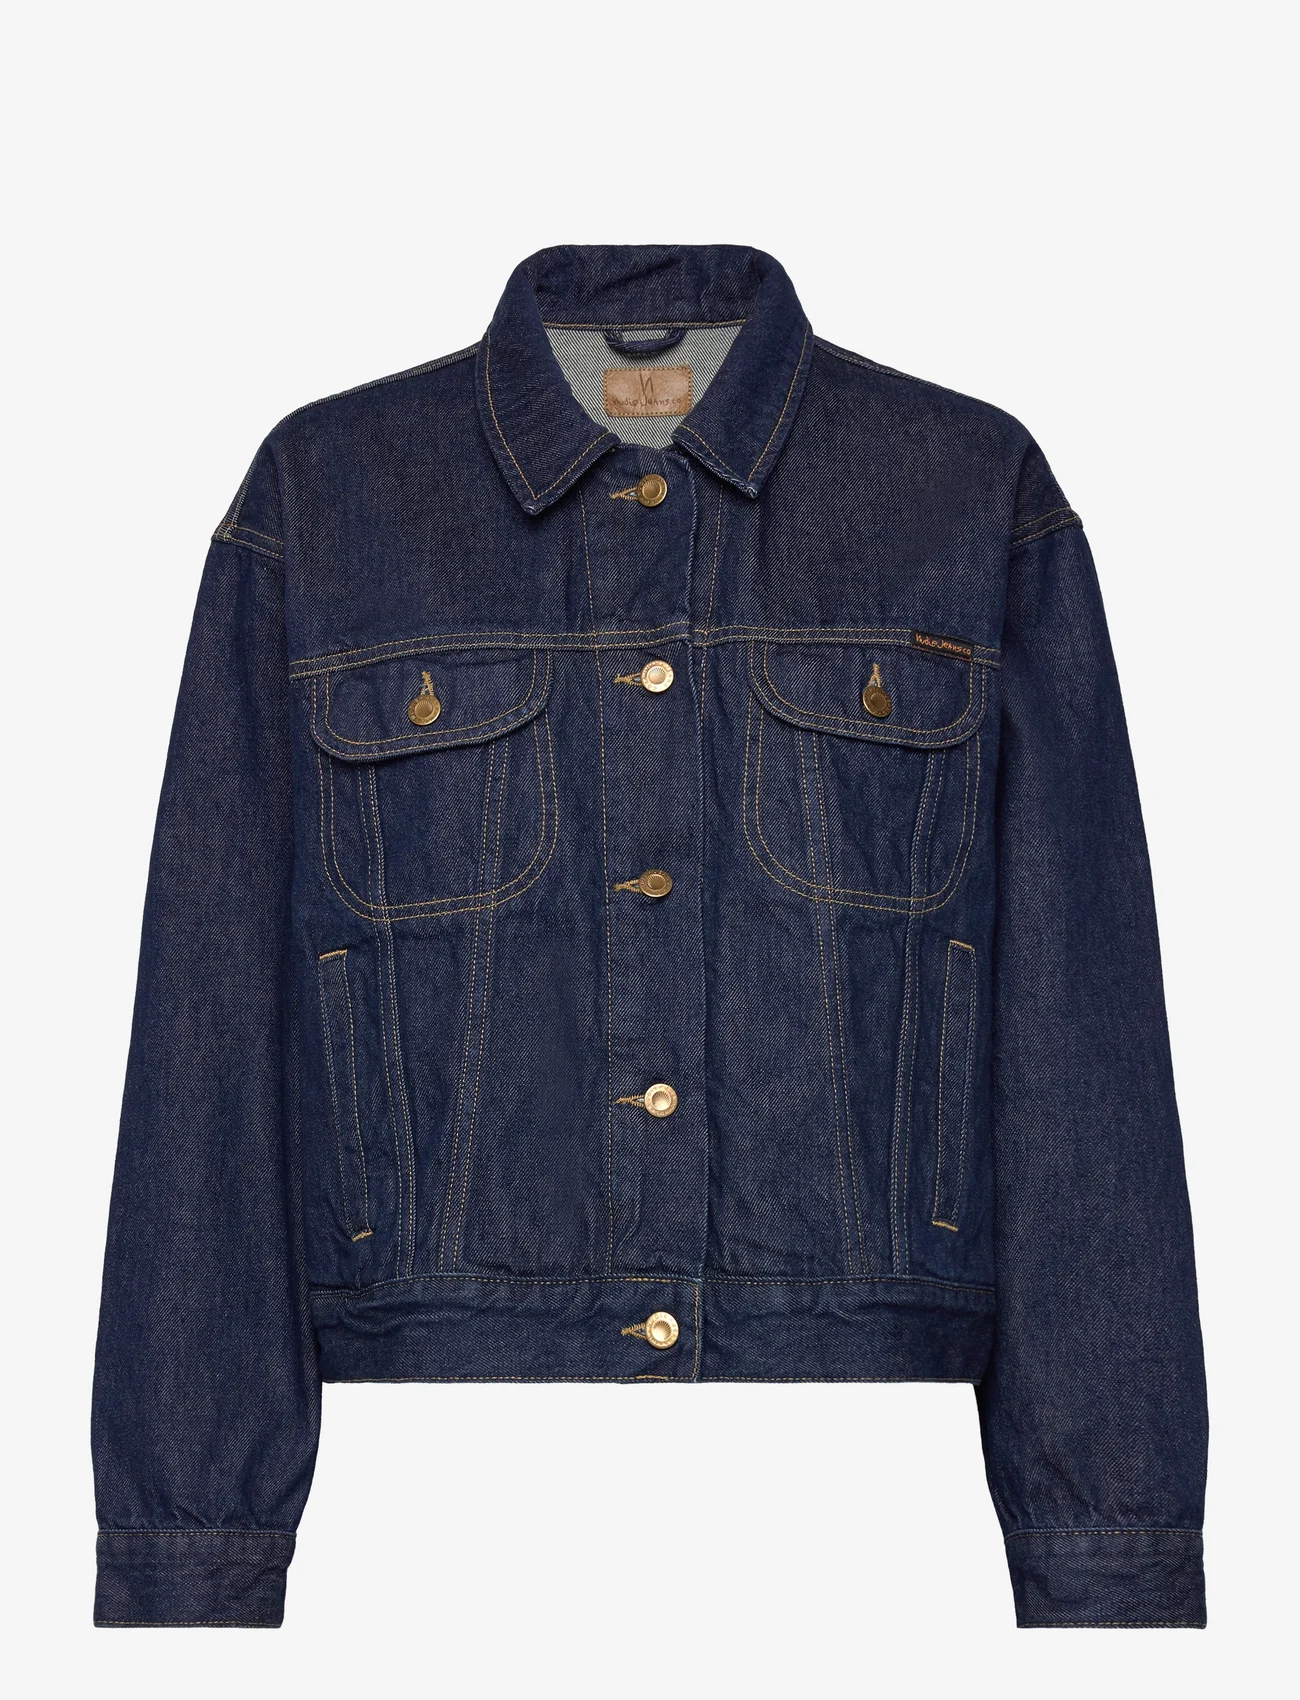 Nudie Jeans - Berit Denim Jacket Classic Blue - jeansjackor - blue - 0